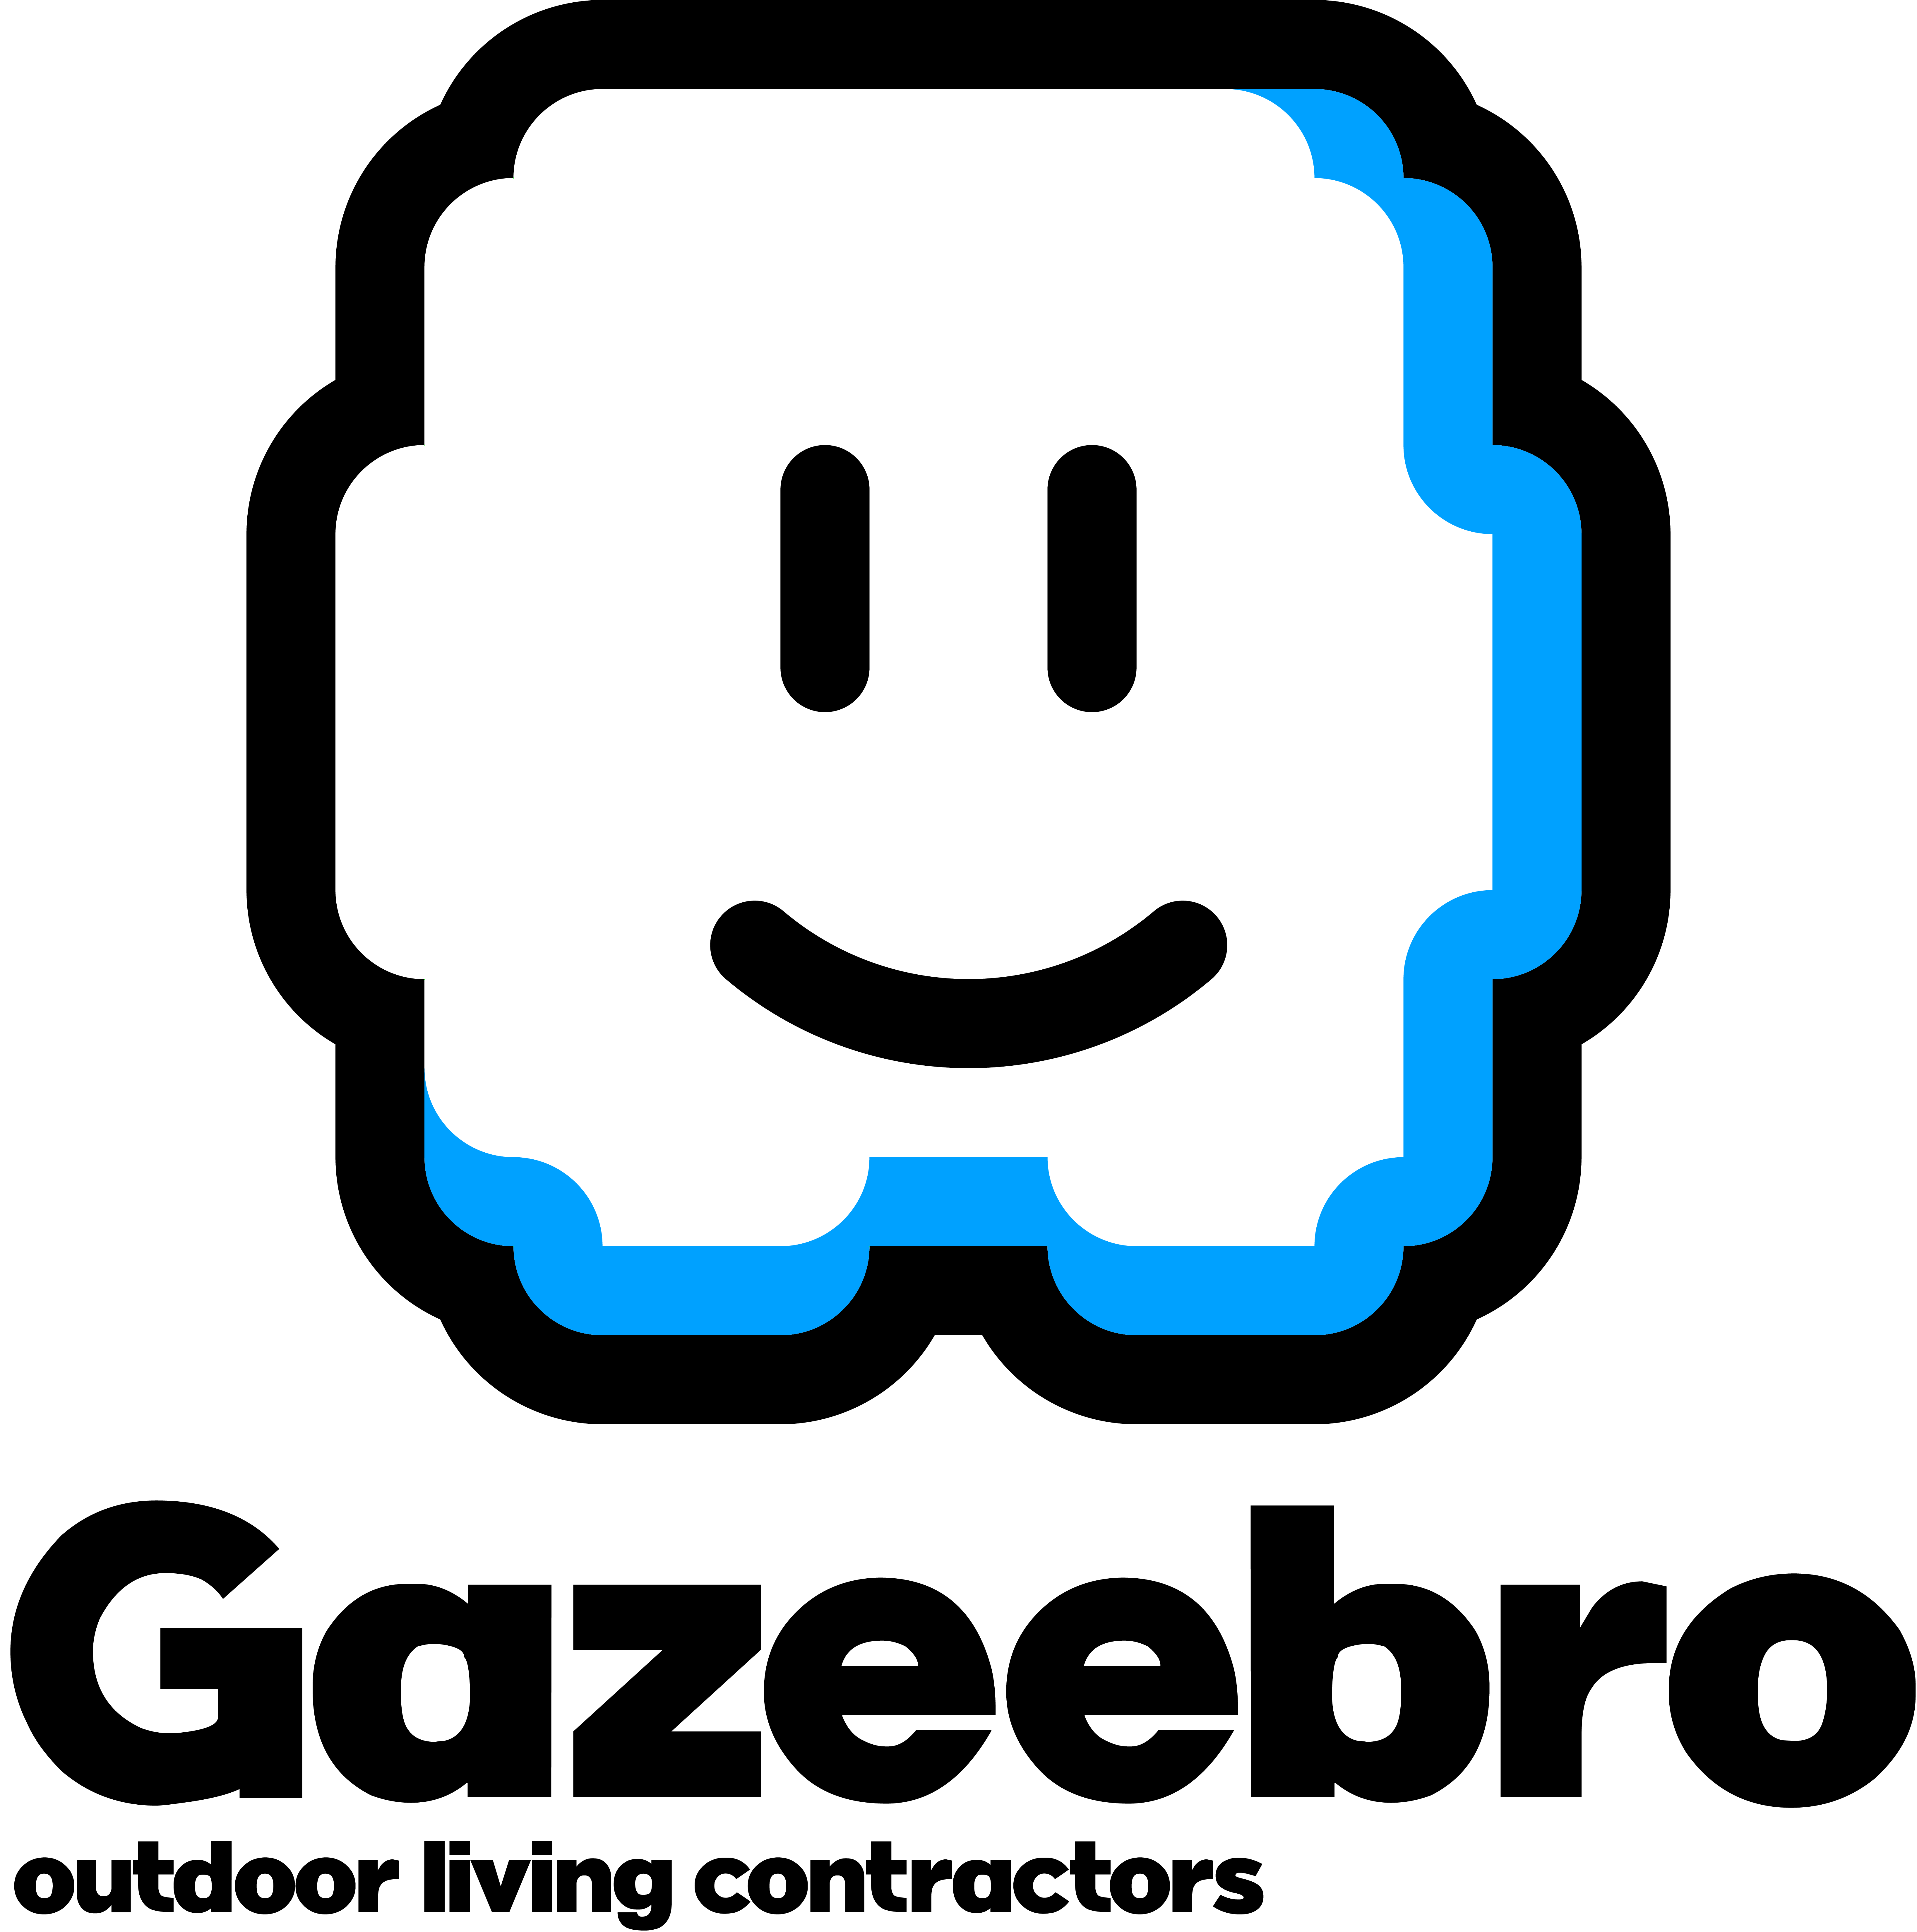 Gazeebro - Outdoor Living Contractors's logo